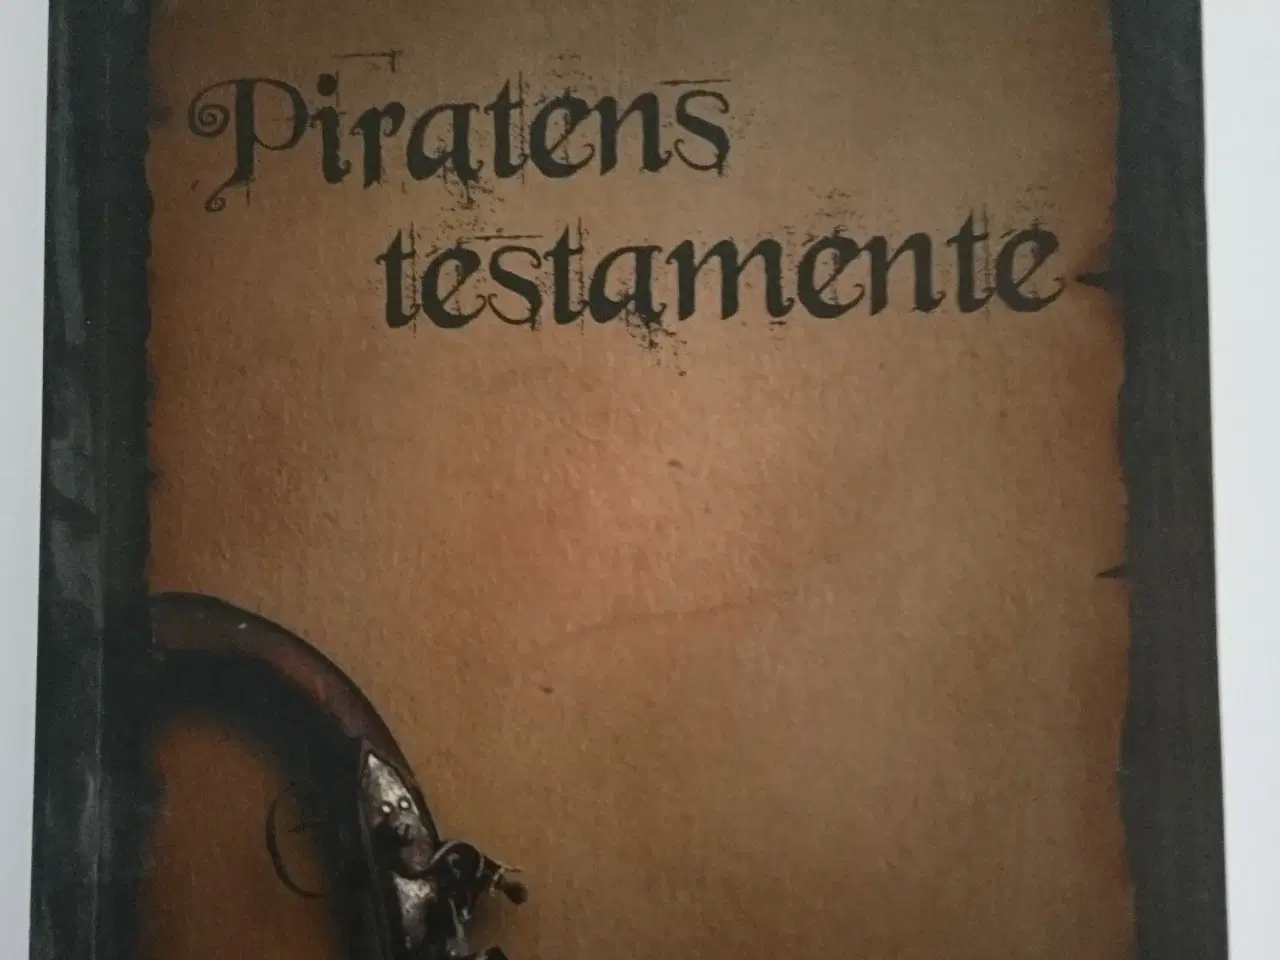 Billede 1 - Piratens testamente. Af Bjarne Hatting